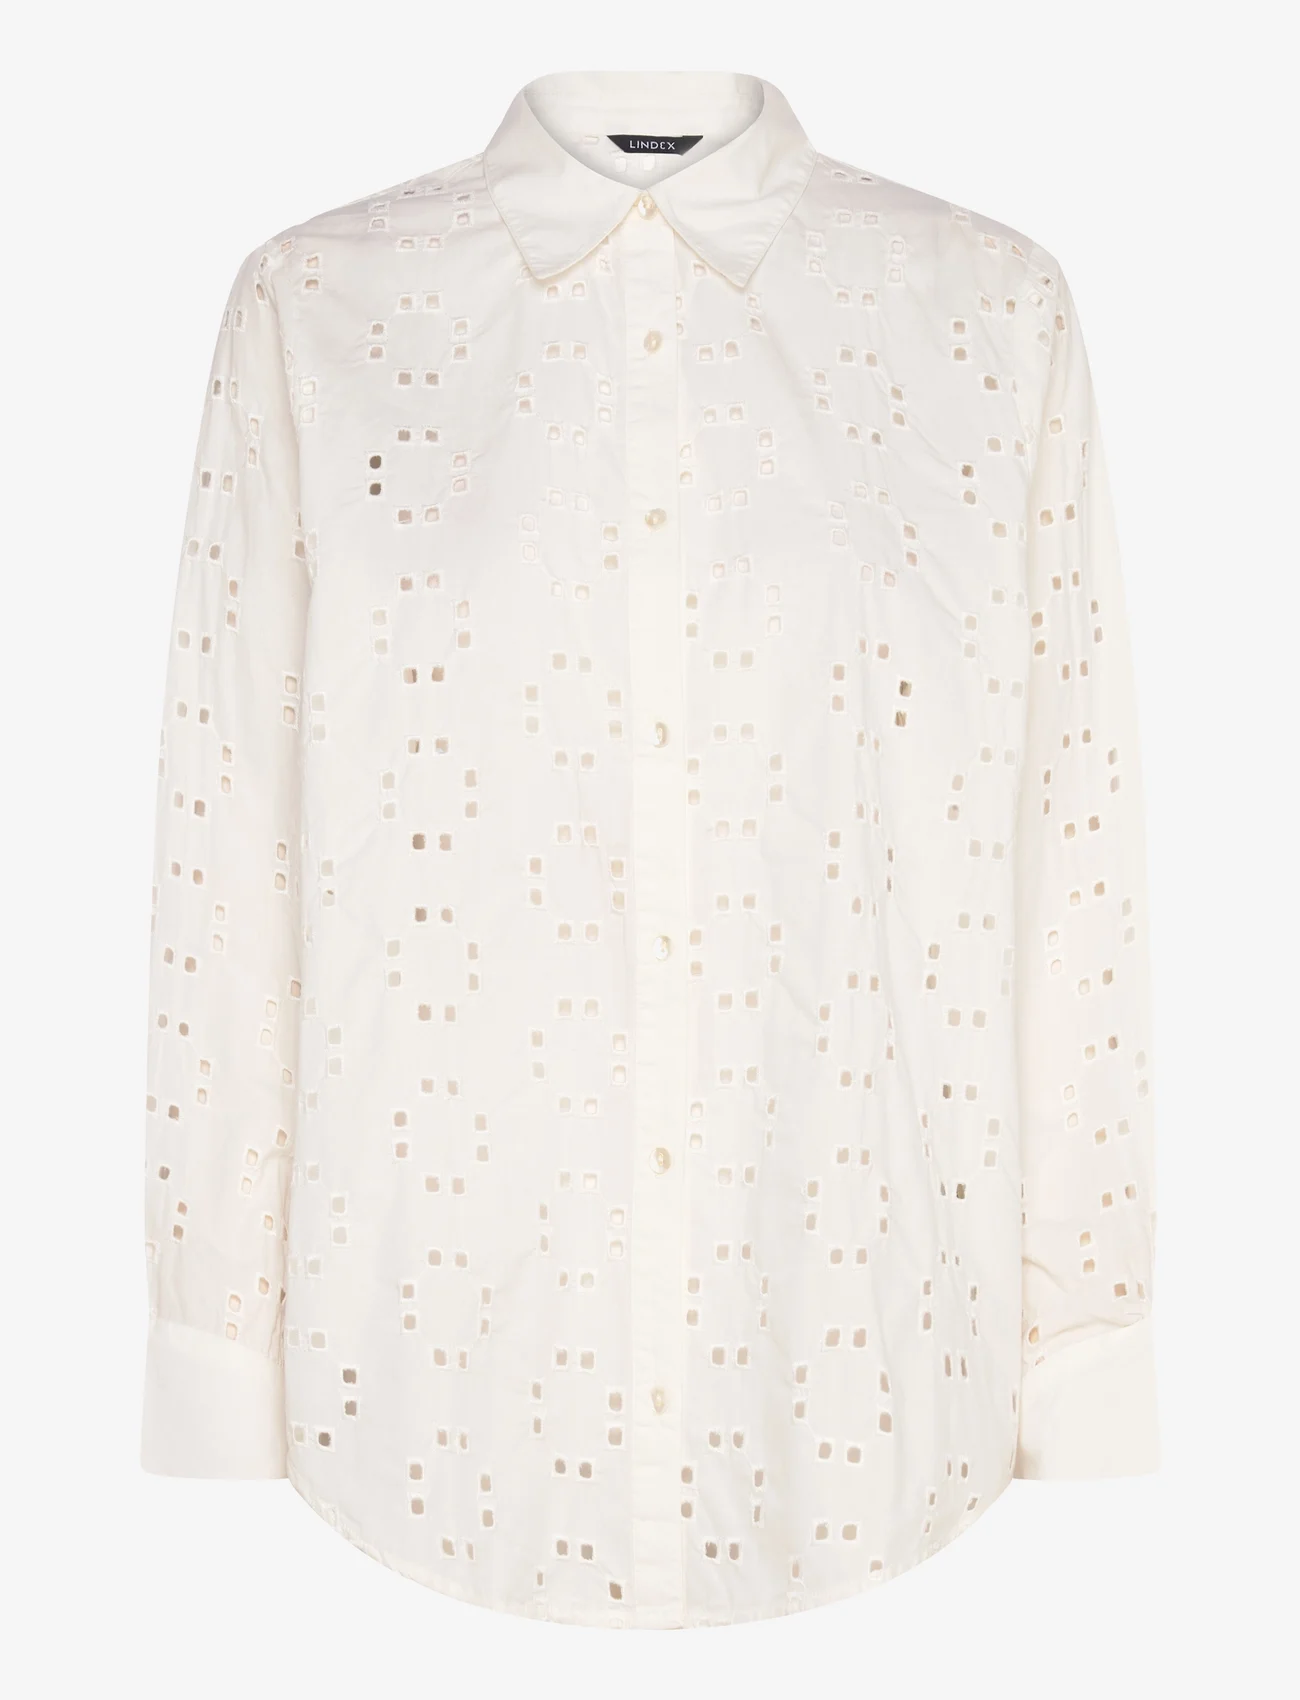 Lindex - Shirt Heidi - langärmlige hemden - light white - 0